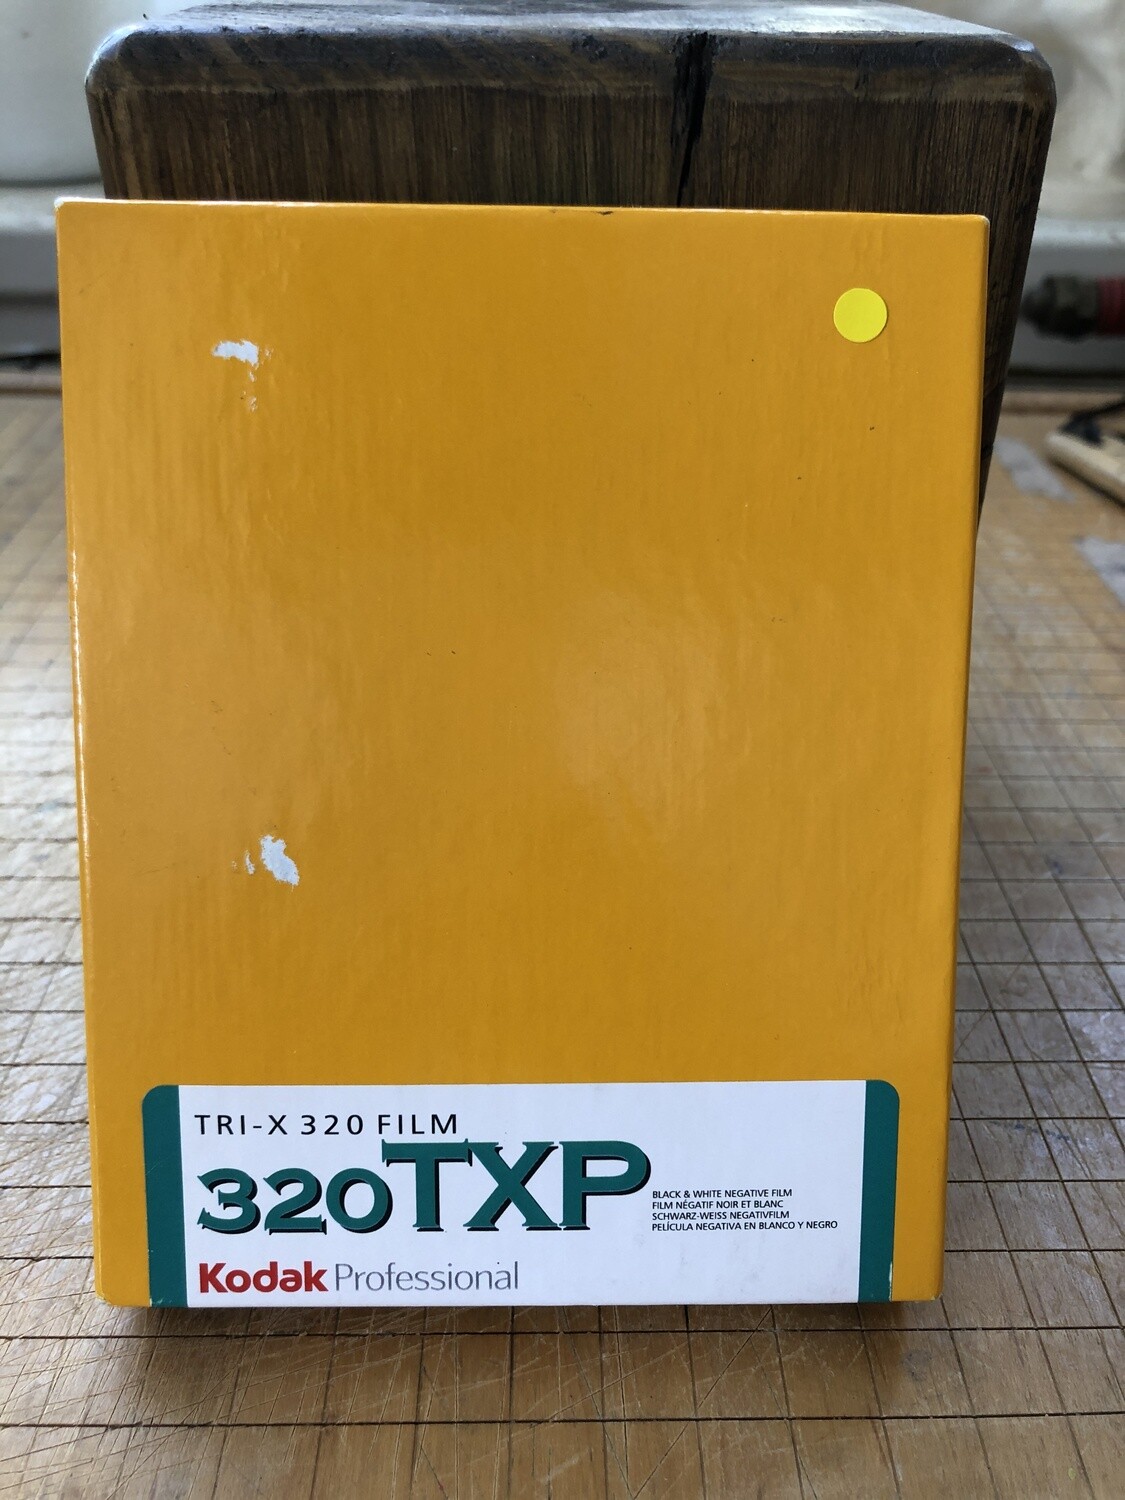 Kodak Professional: TRI-X 320 TXP Film - 4x5” Open: 9 remaining